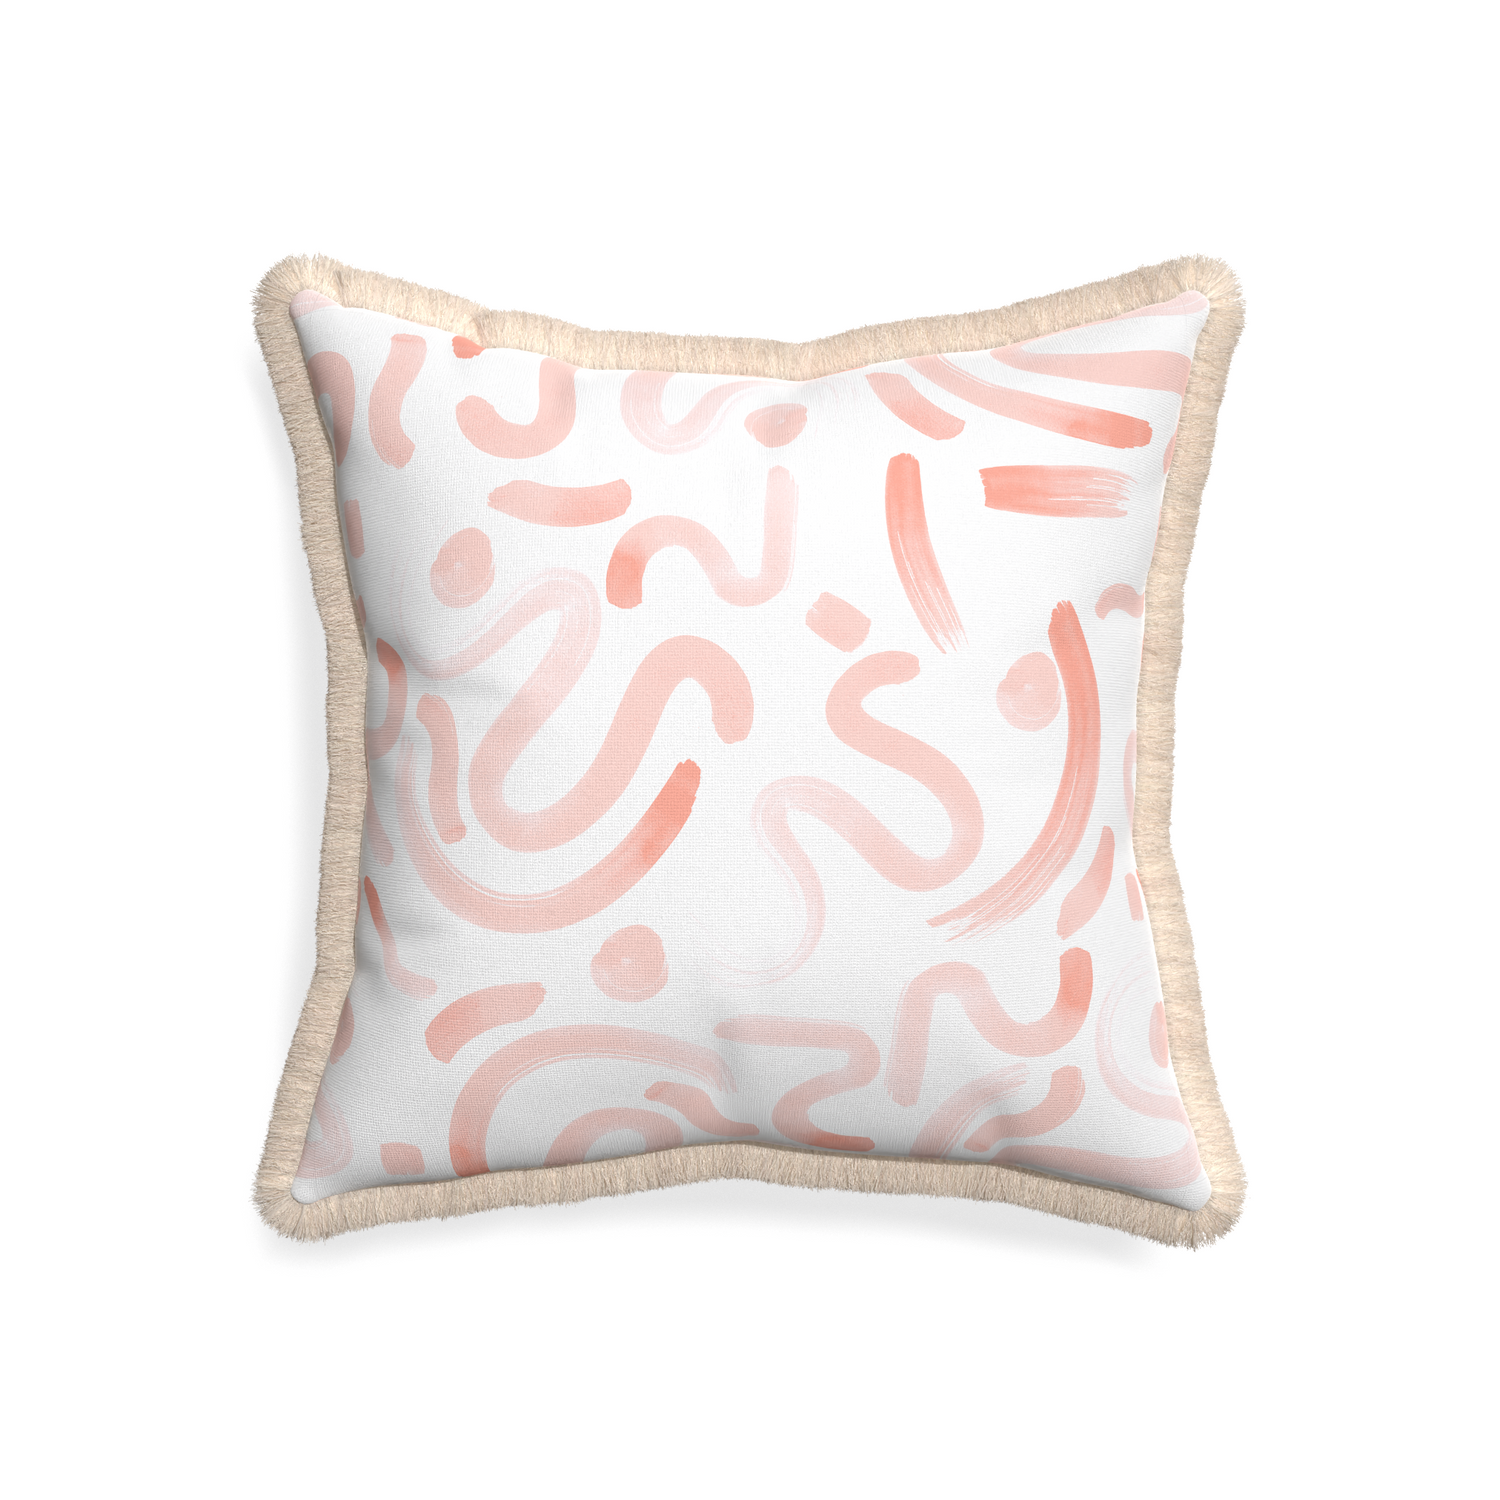 20-square hockney pink custom pillow with cream fringe on white background